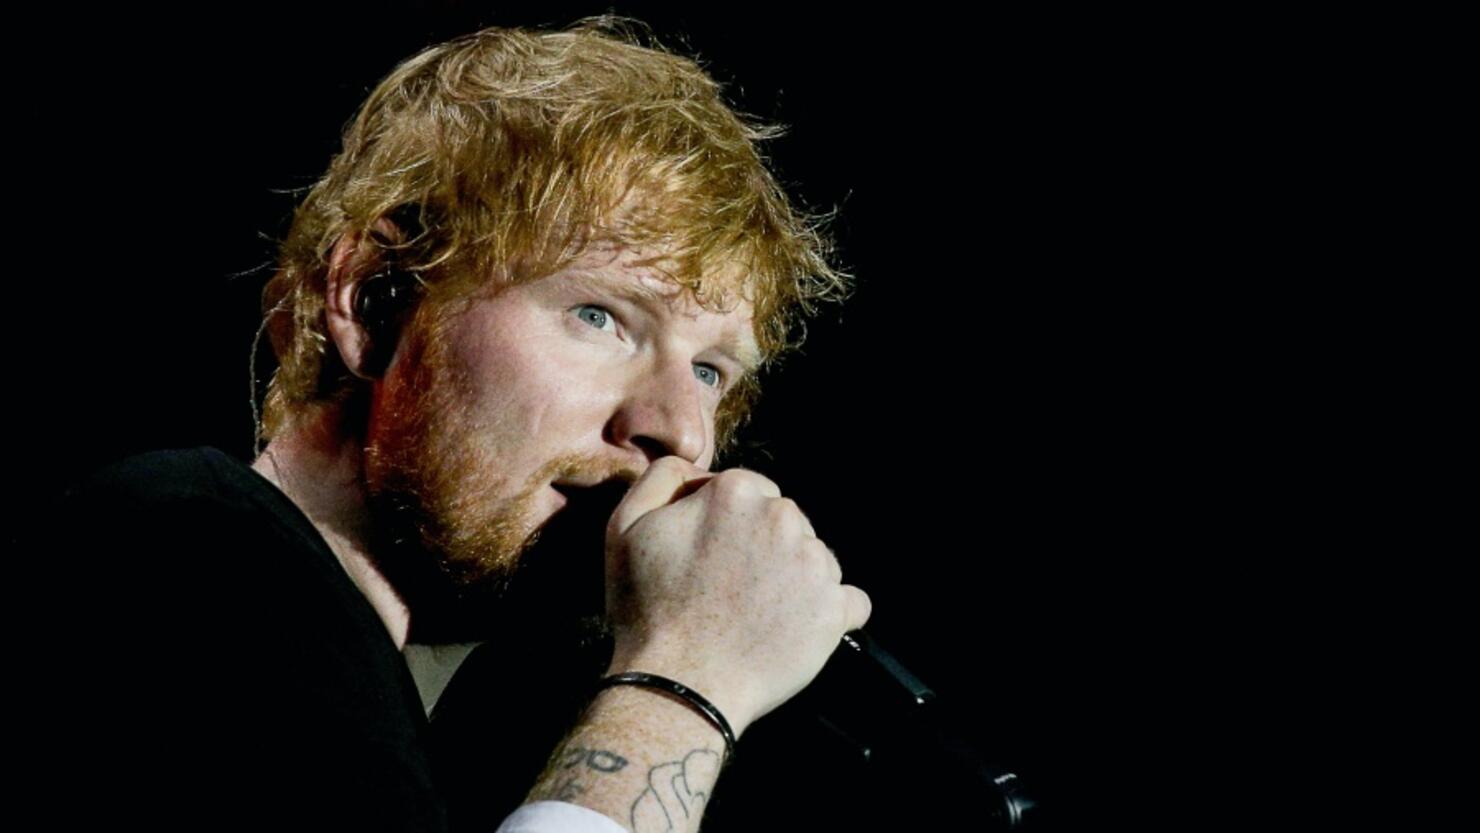 British singer Ed Sheeran performs in Moscow